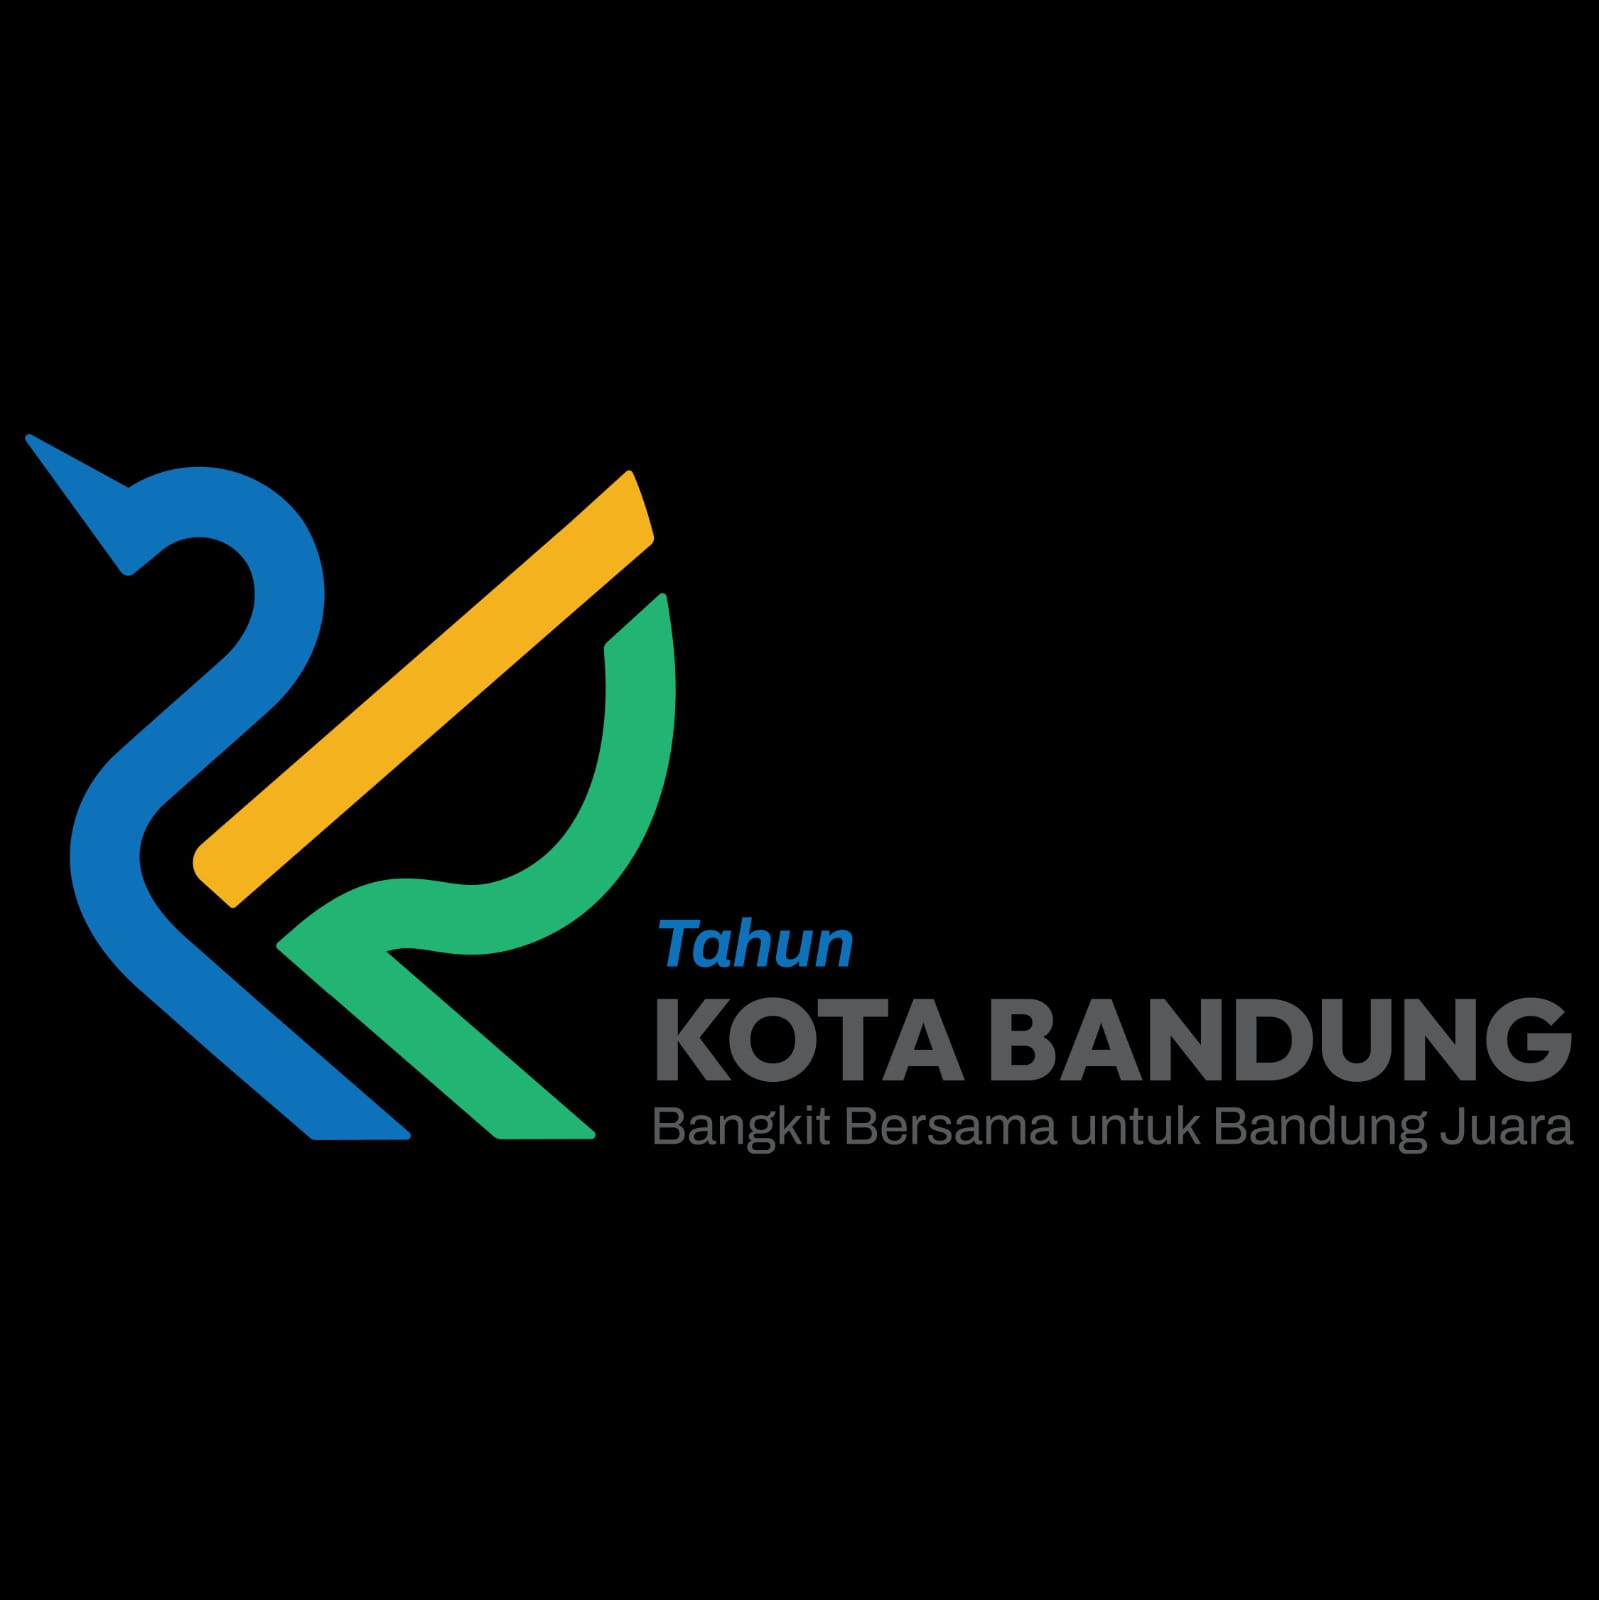 Ramaikan Hari Jadi Kota Bandung, Raih Hadiah Umroh